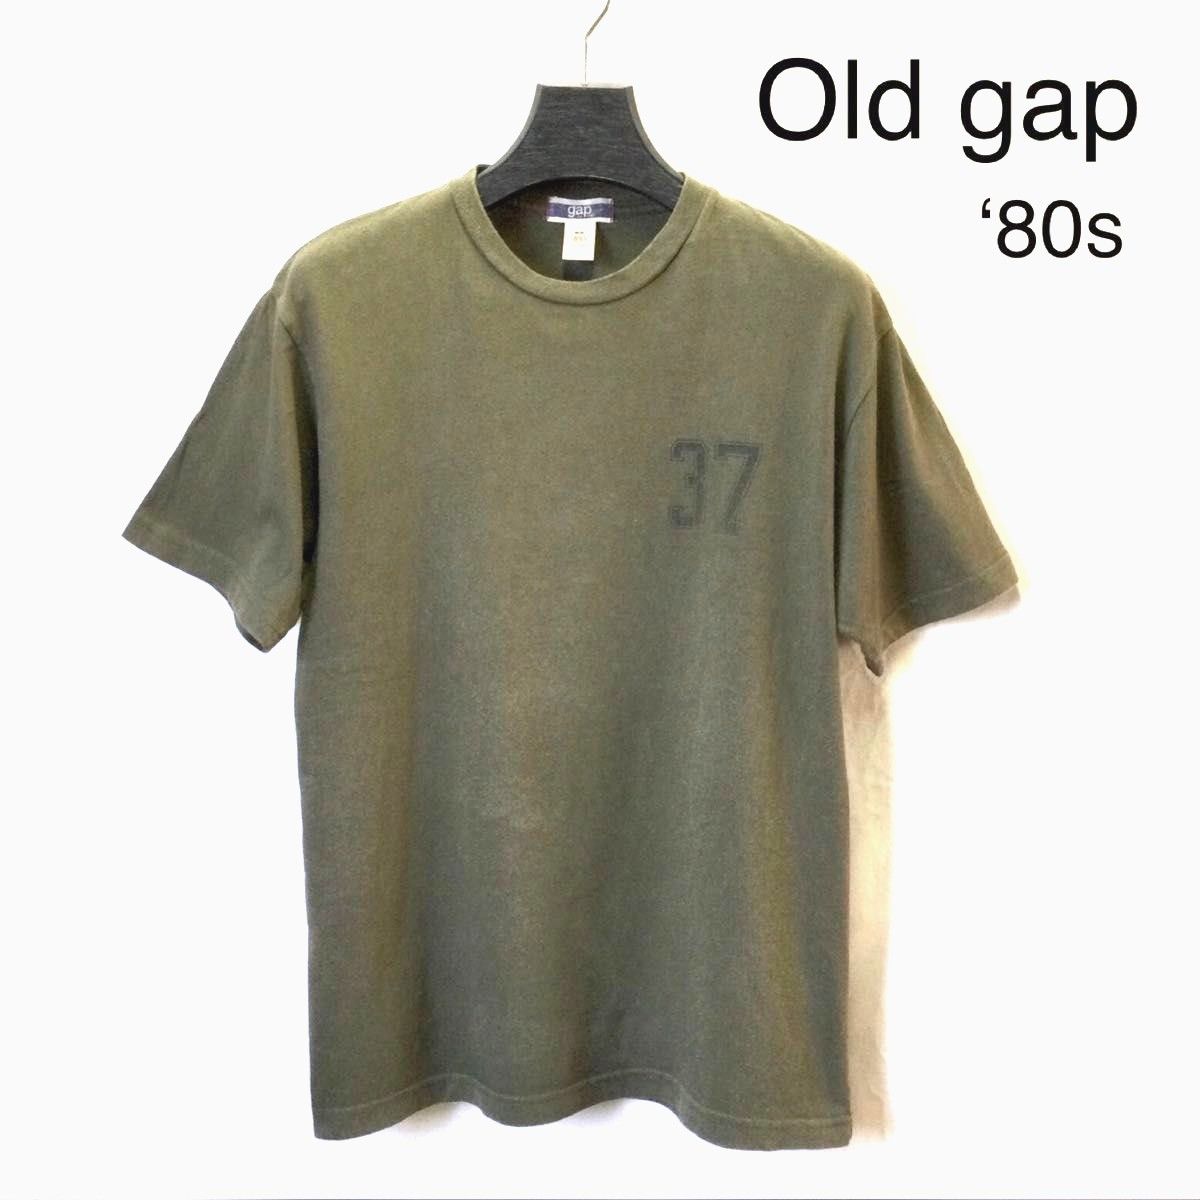 Old gap 80s 小文字タグ 旧タグ ヴィンテージ Tシャツ ミリタリー アーミー モスグリーン オールドギャップ  古着